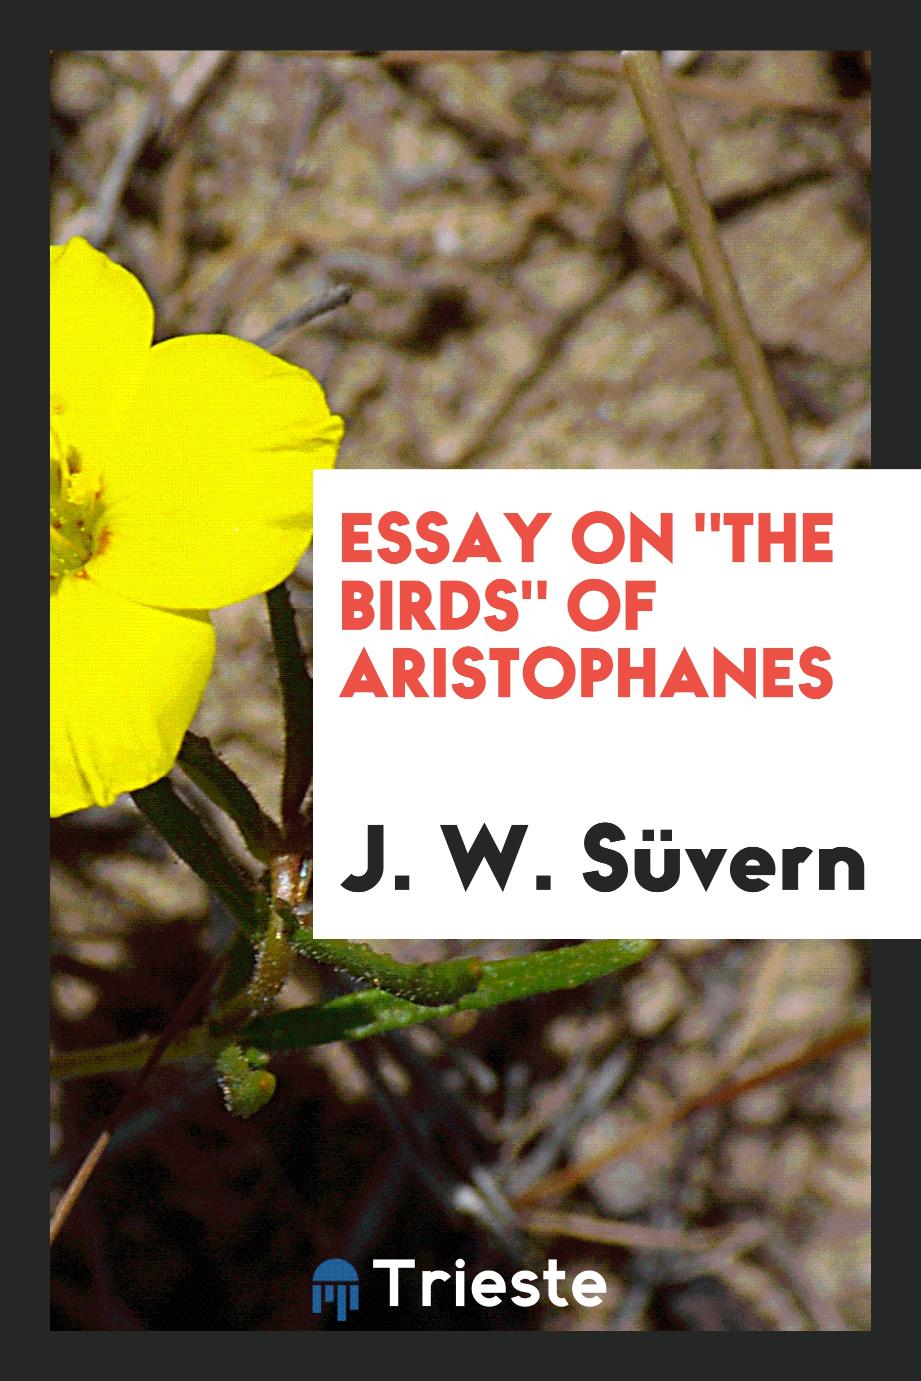 Essay on "The Birds" of Aristophanes